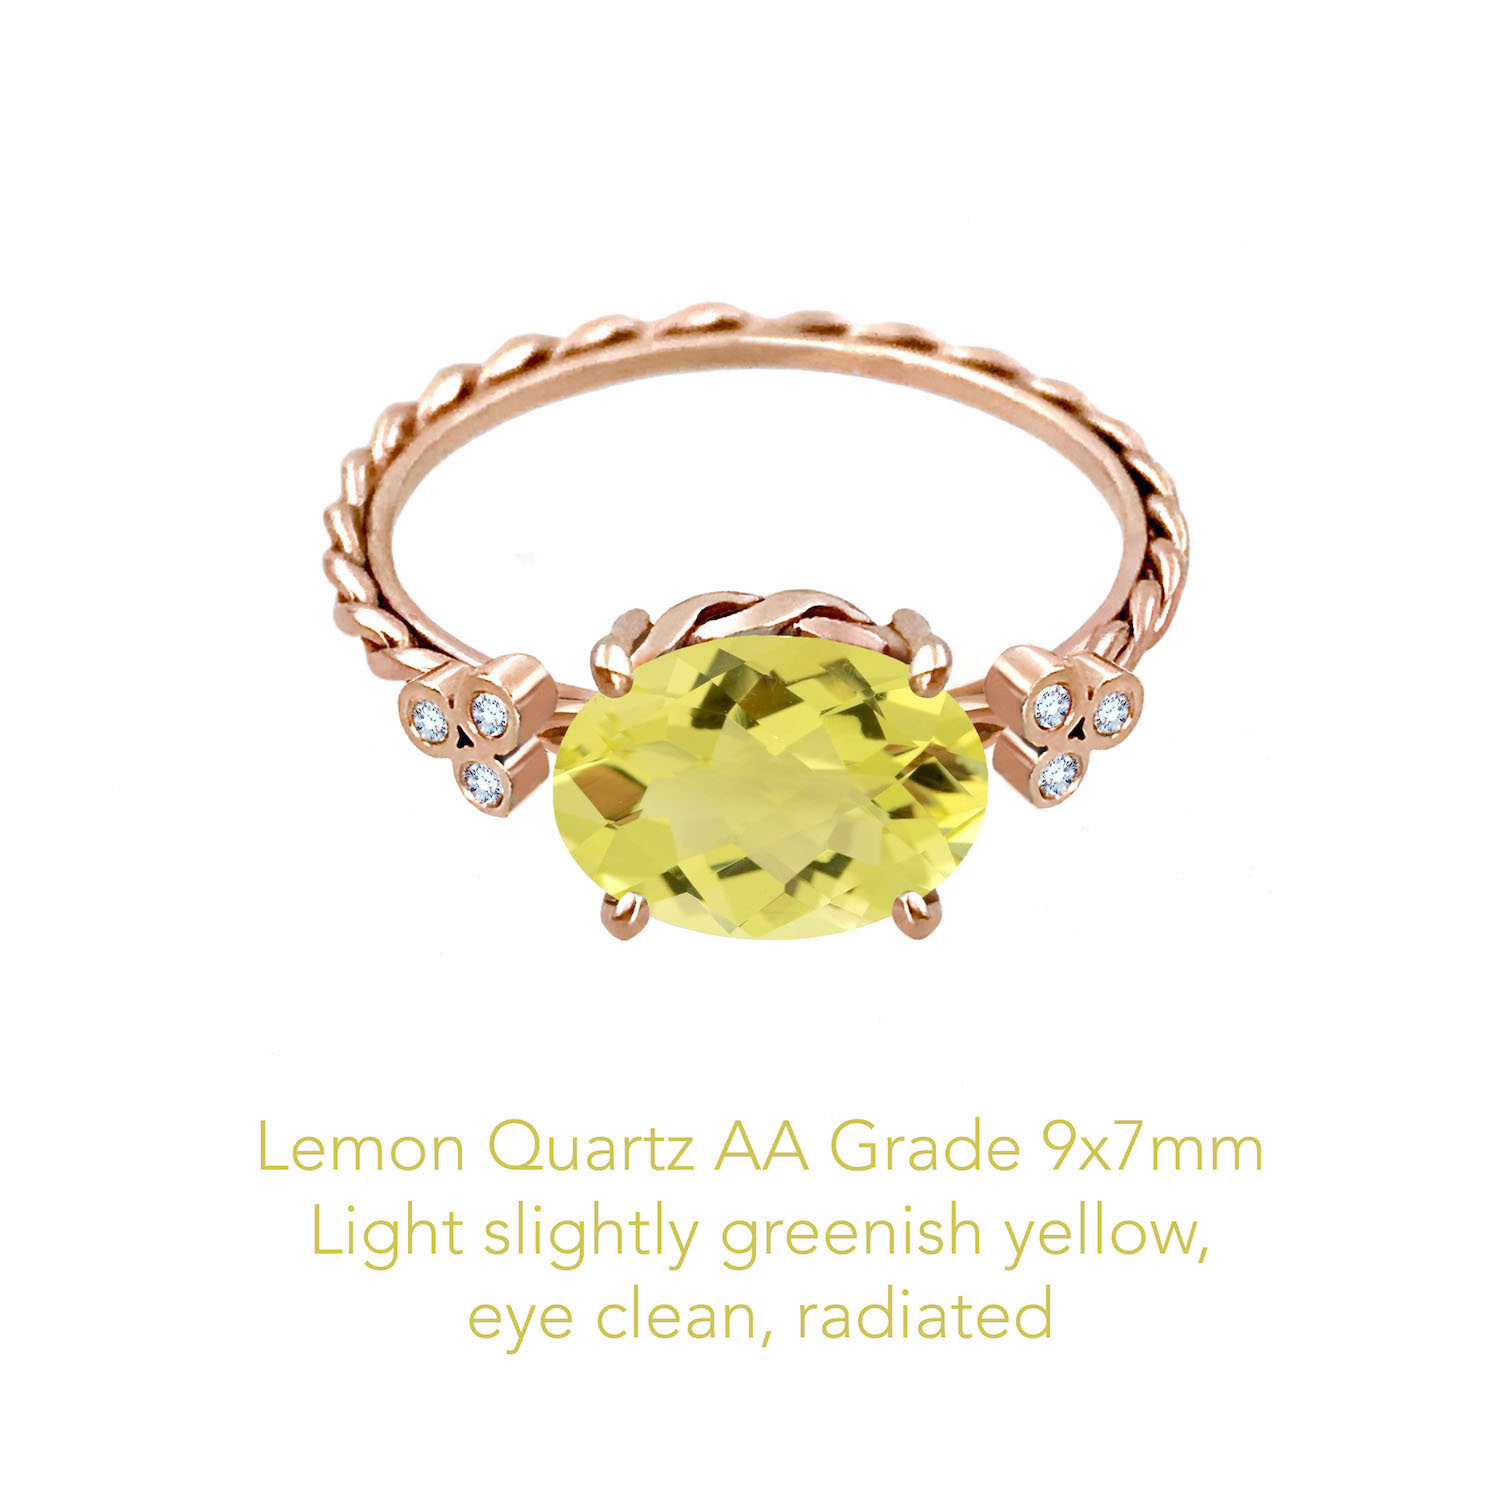 Quartz Lemon AA 9x7